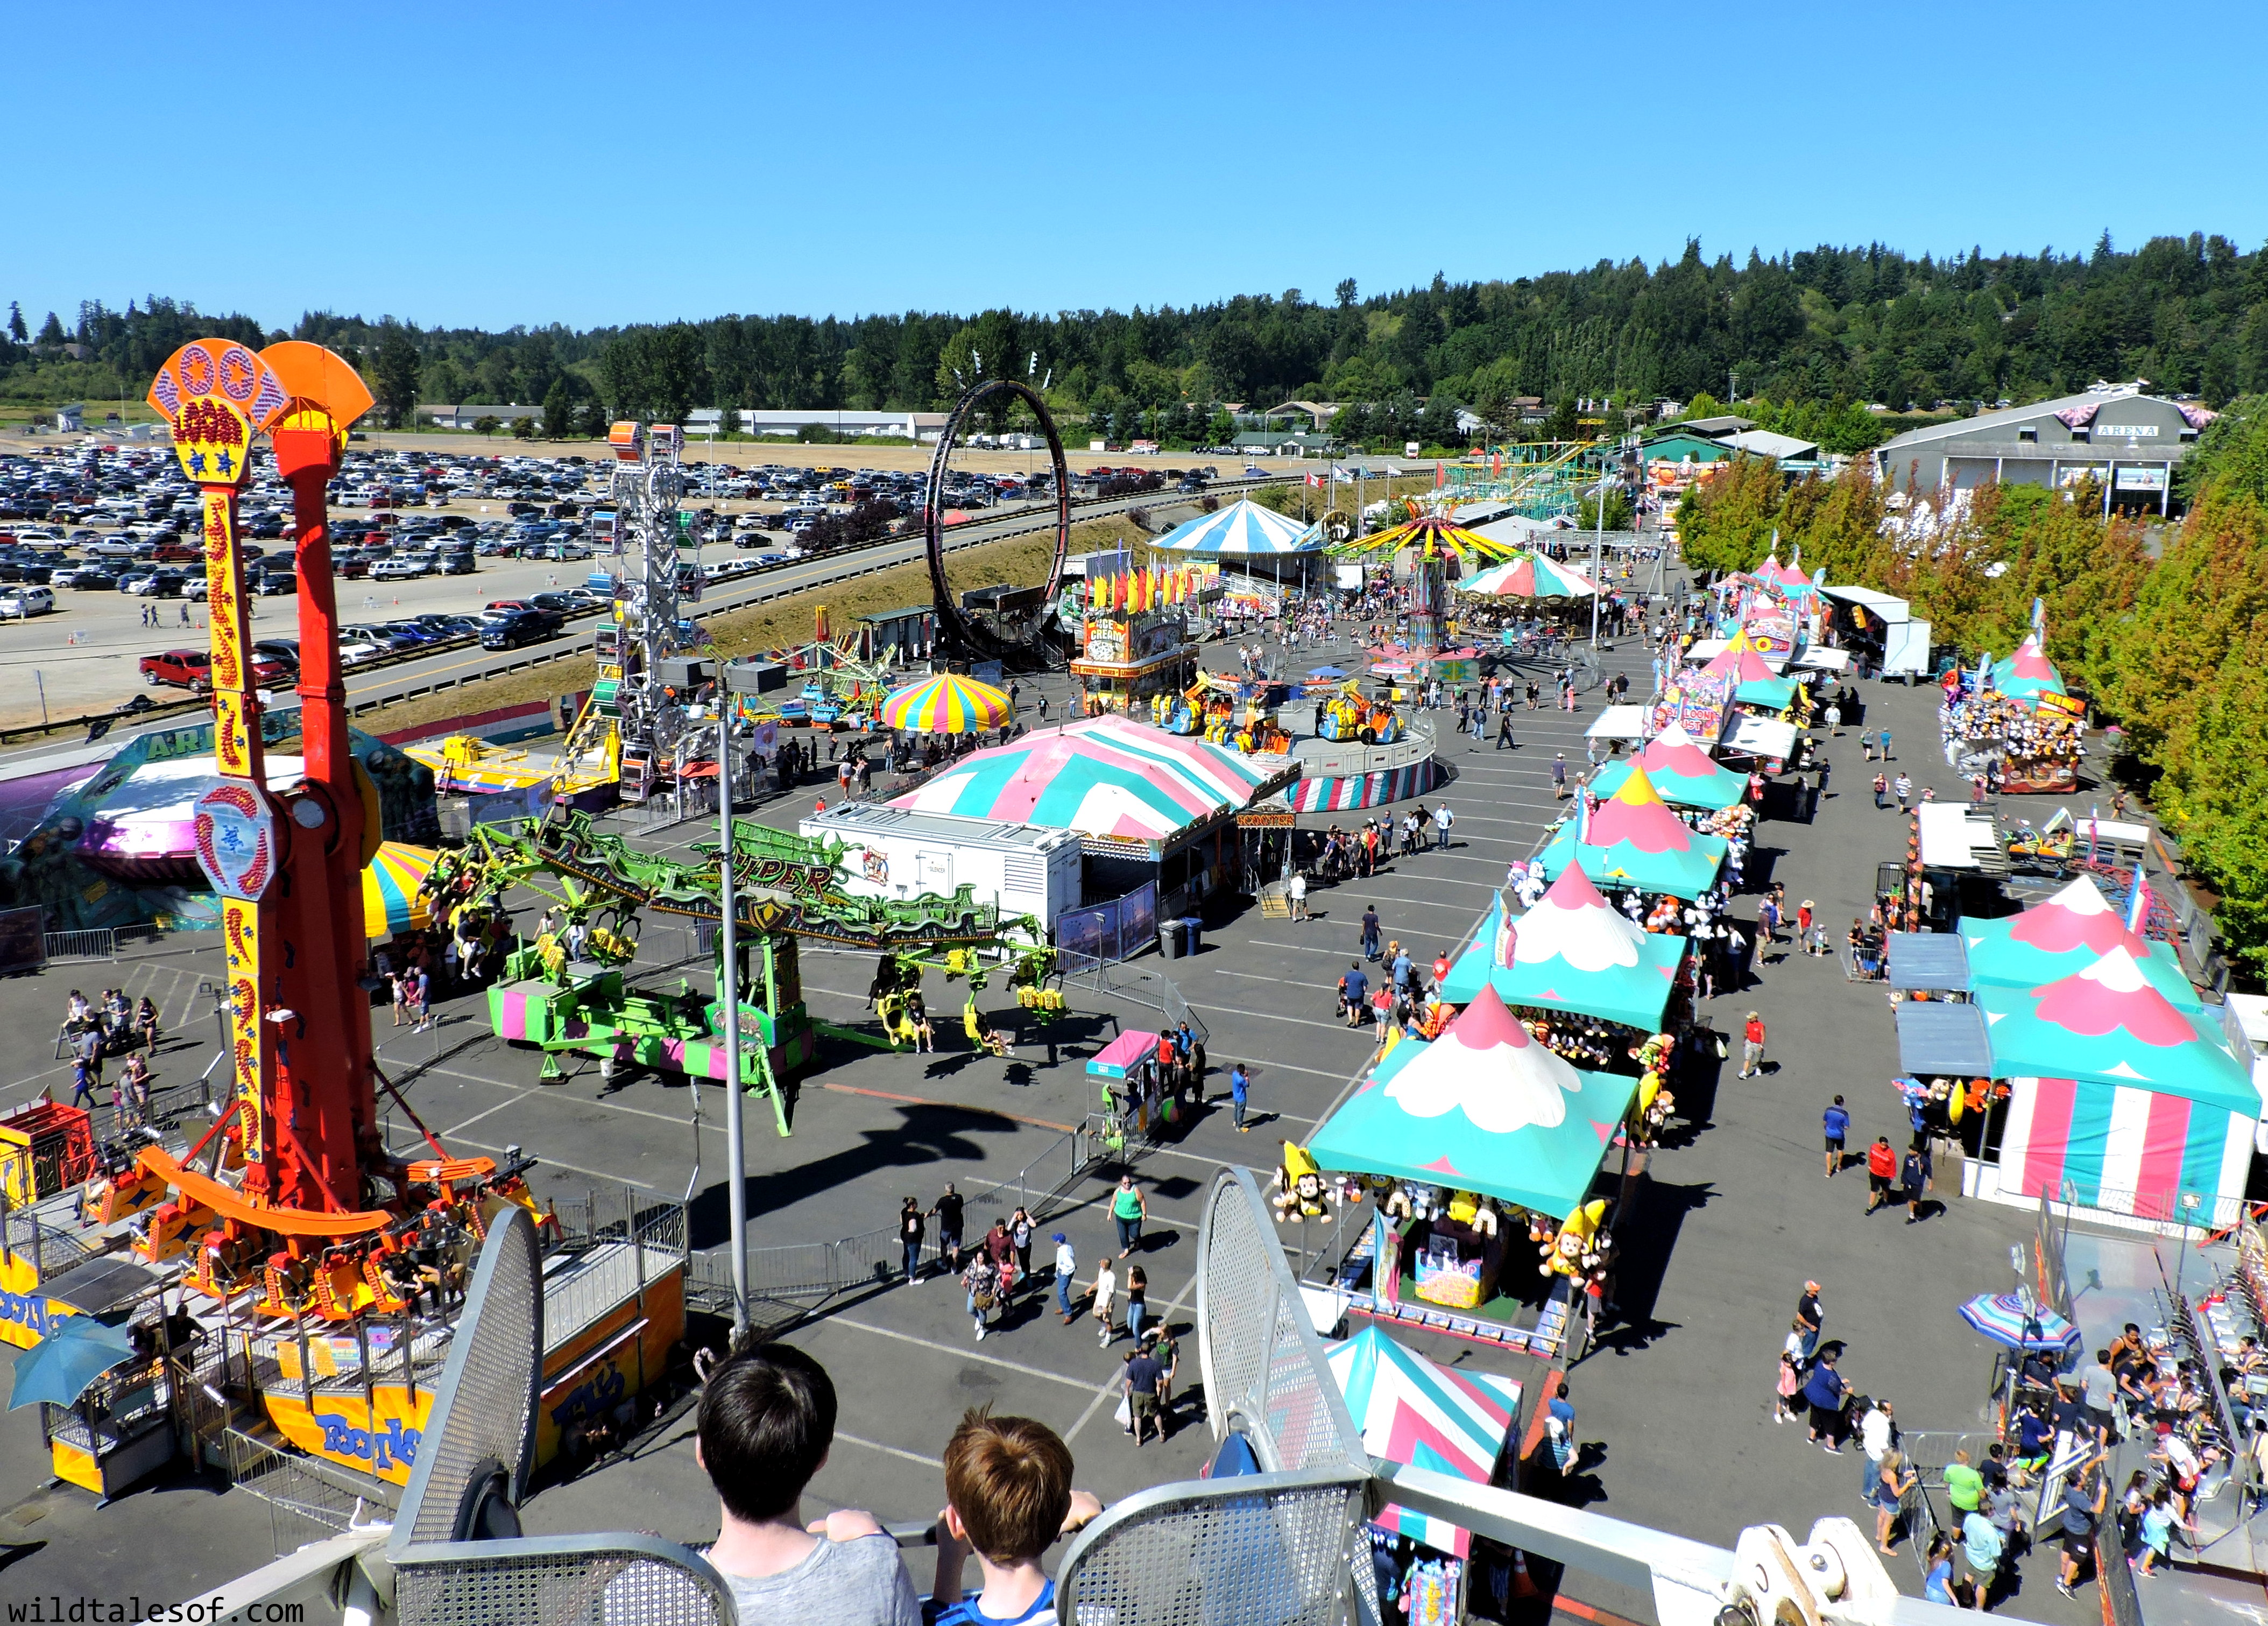 Late Summer Fun Highlights from Washington's Evergreen State Fair